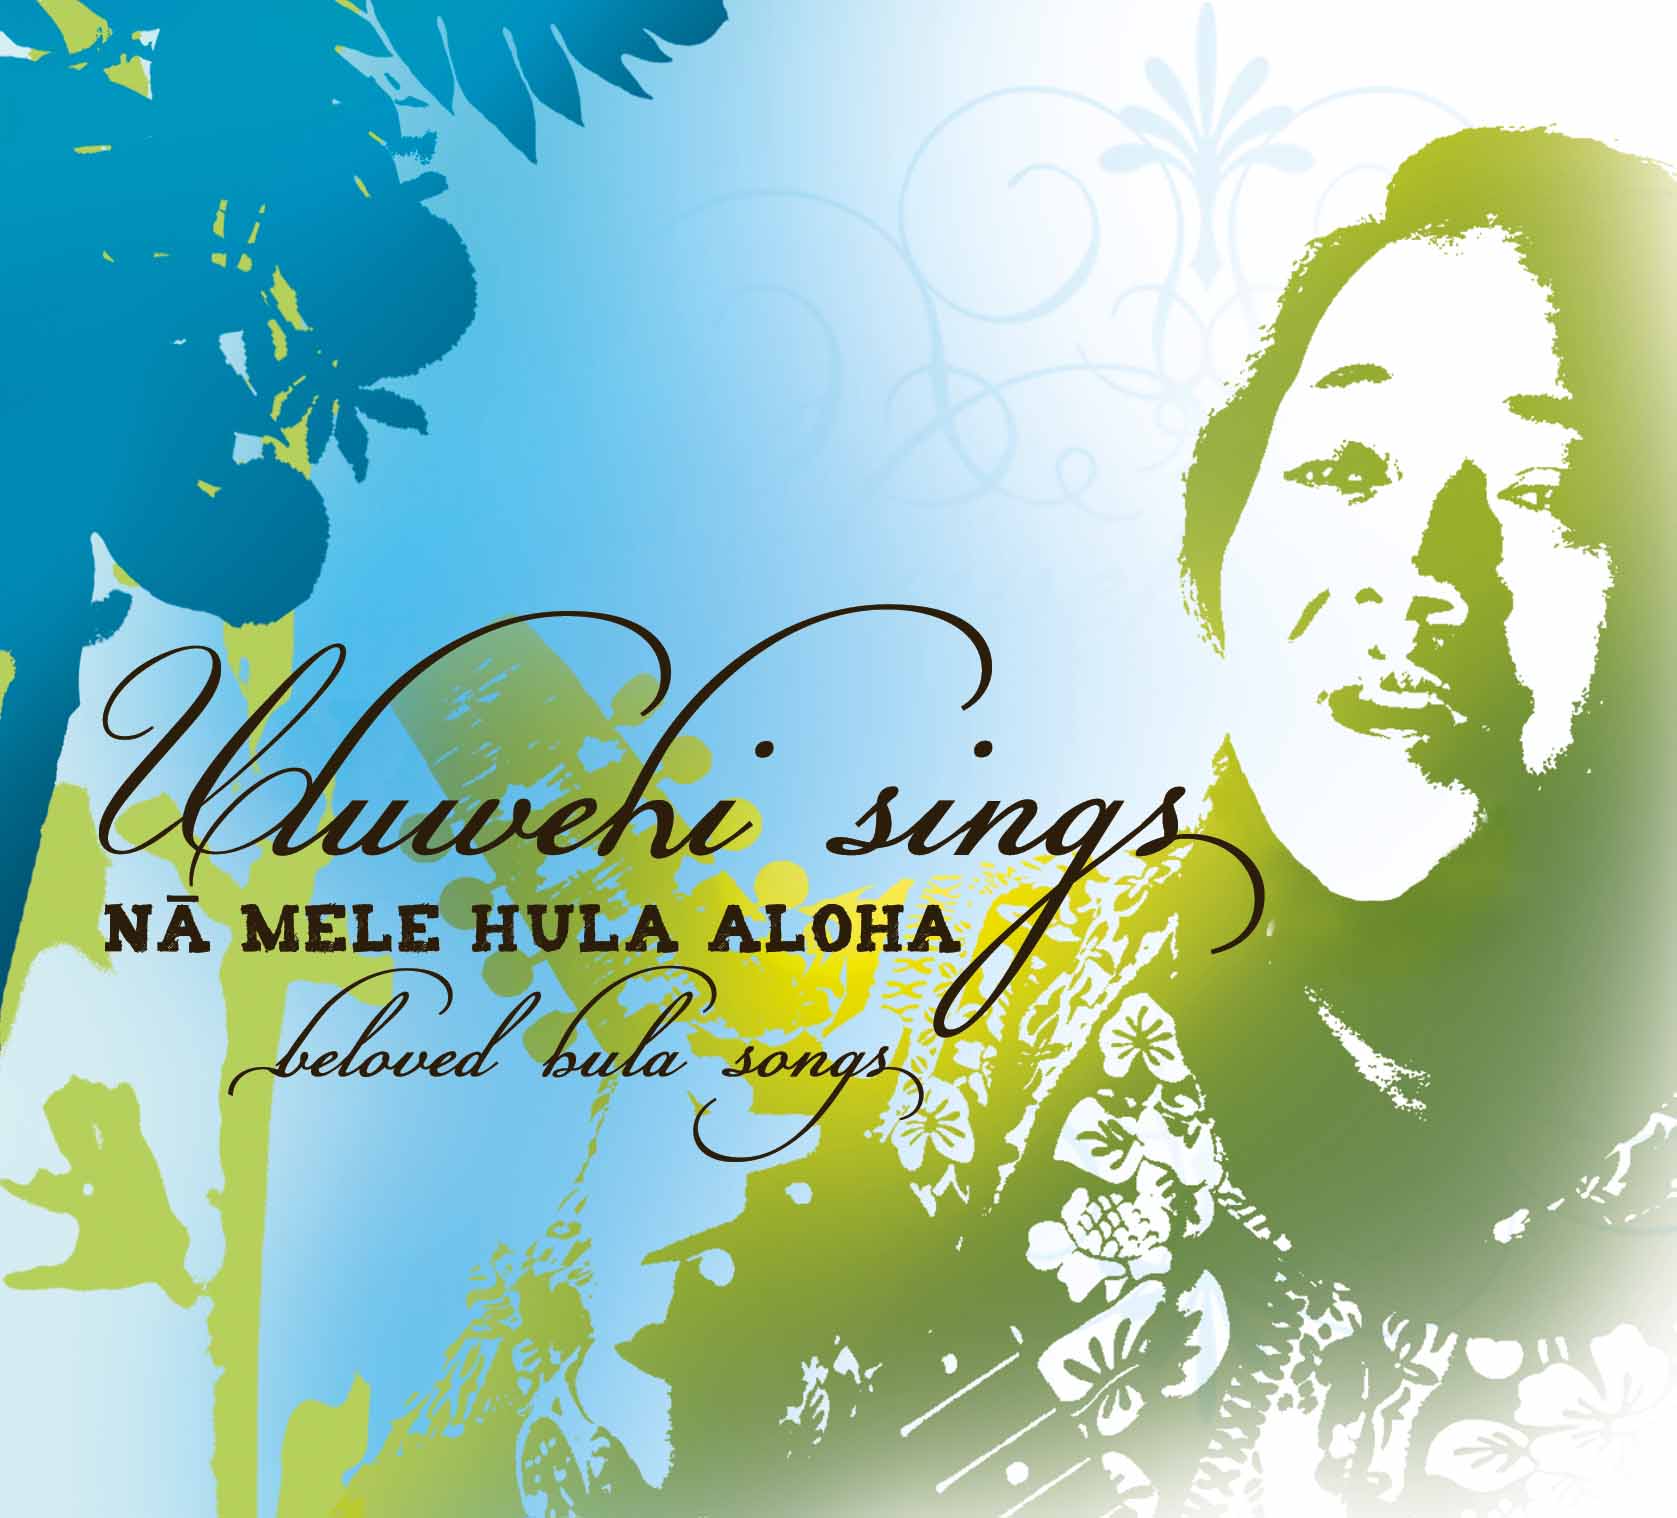 Uluwehi Sings Na Mele Hula Aloha - beloved hula songs